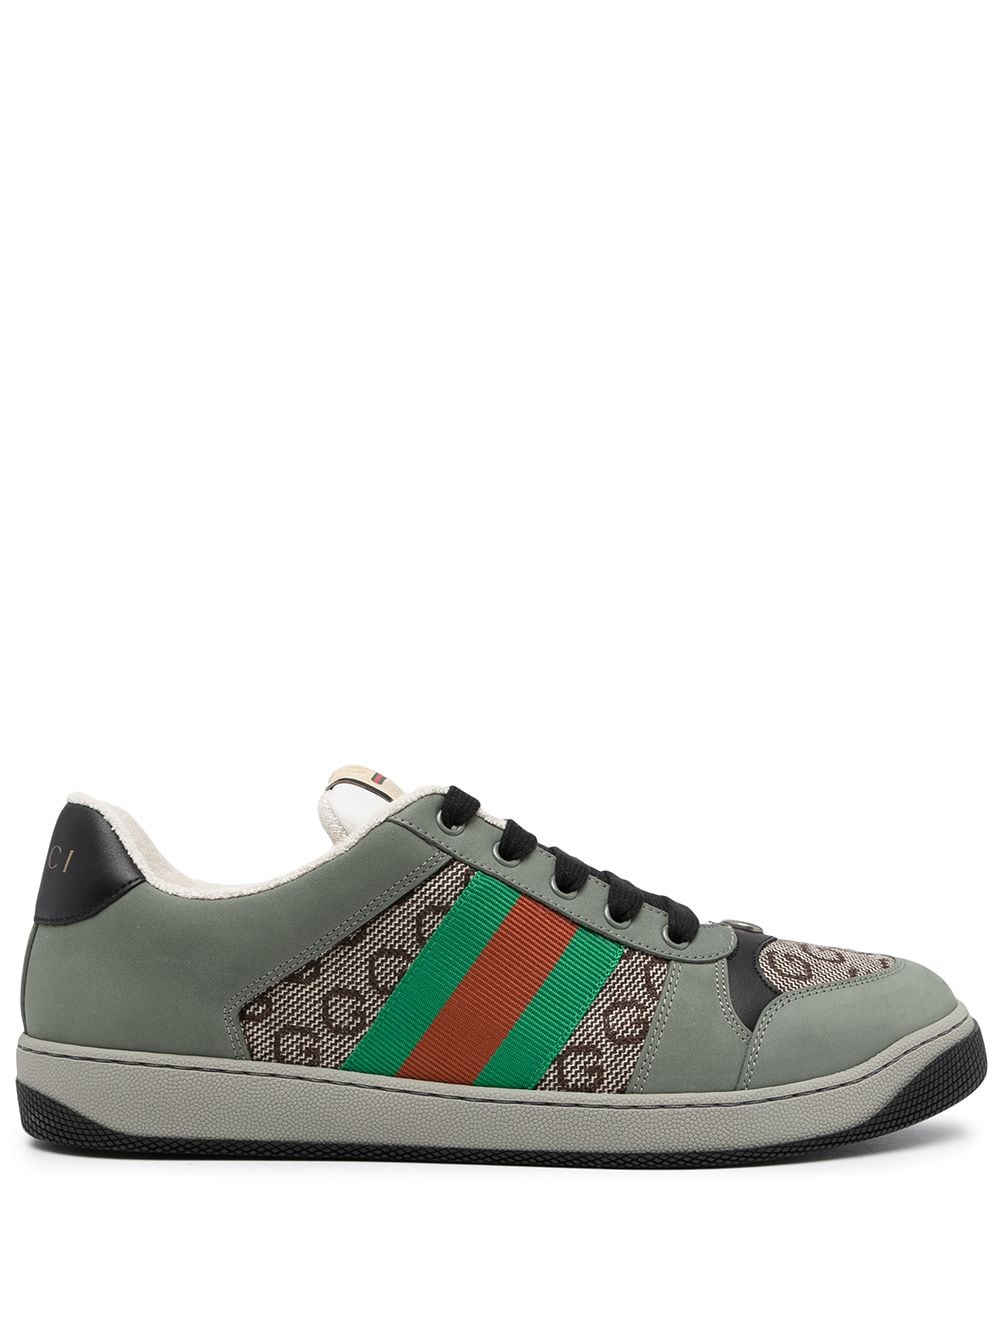 Gucci Screener Leather Sneakers In Multicolour | ModeSens